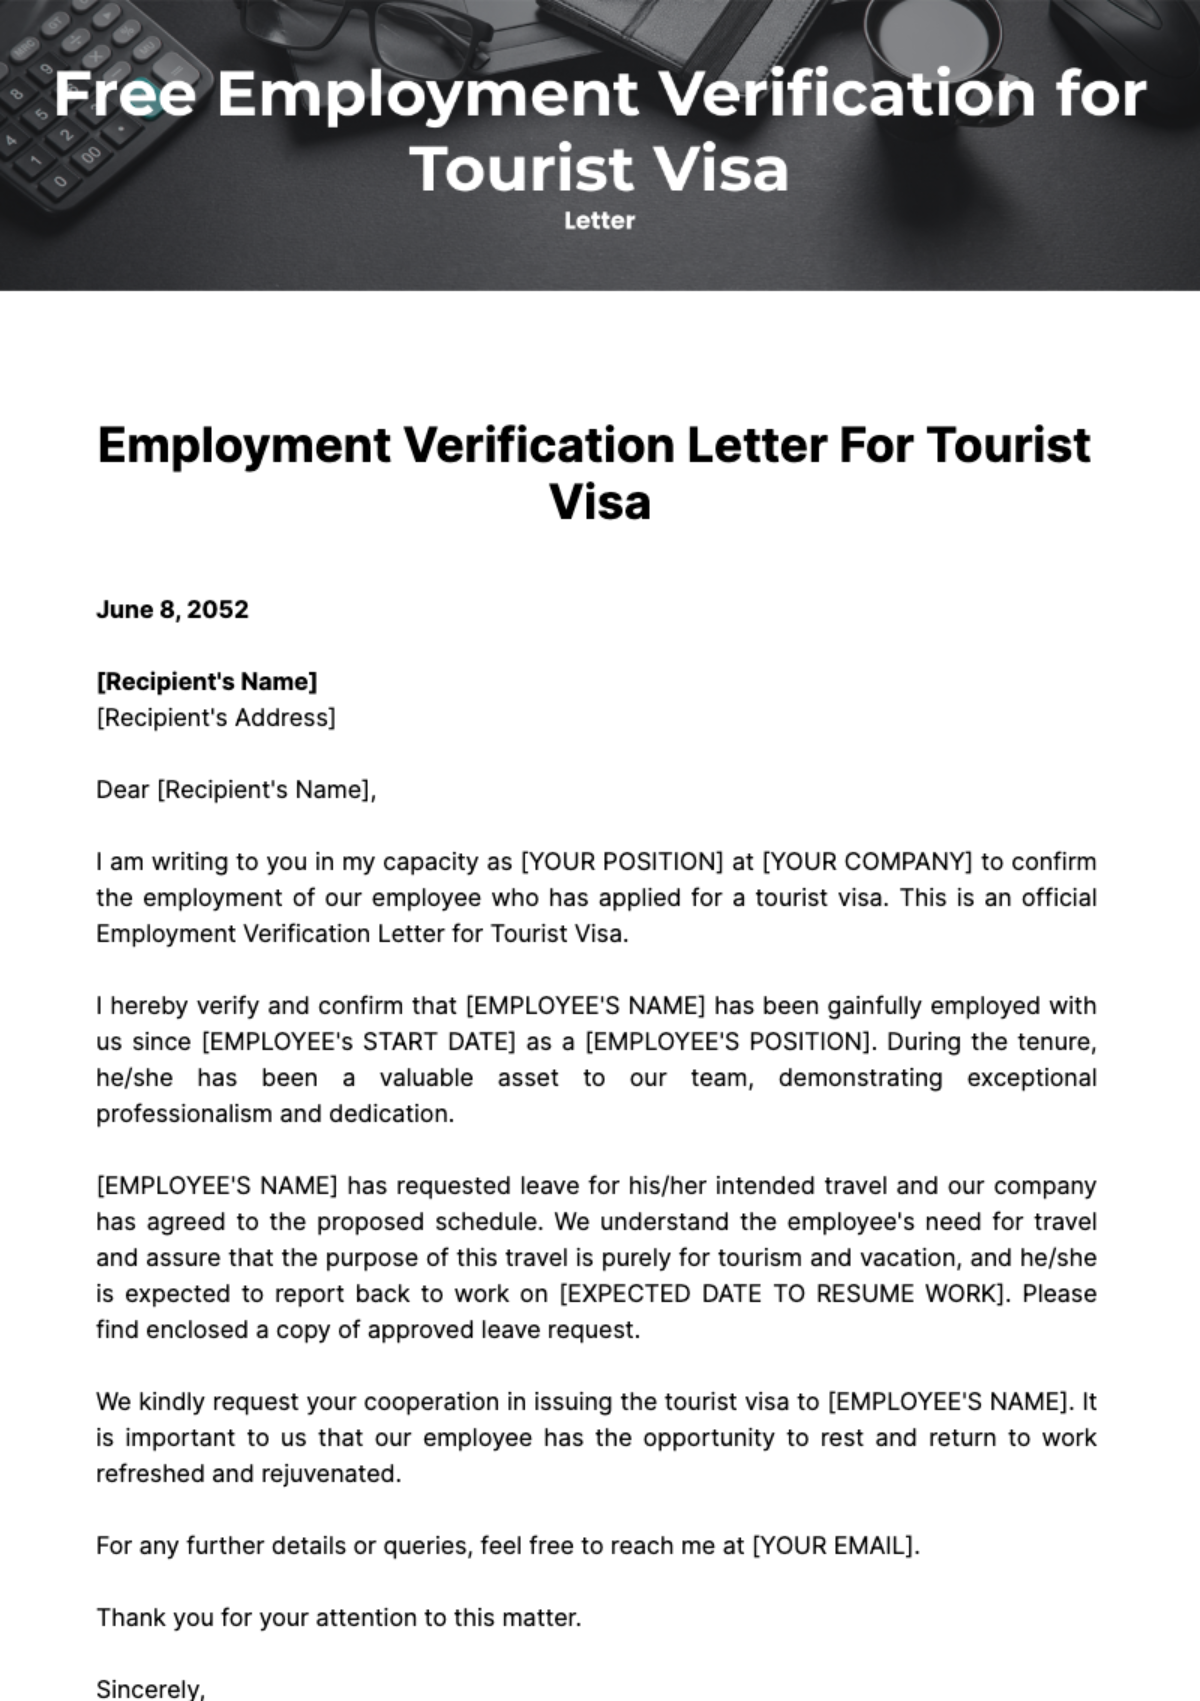 Free Employment Verification Letter for Tourist Visa Template